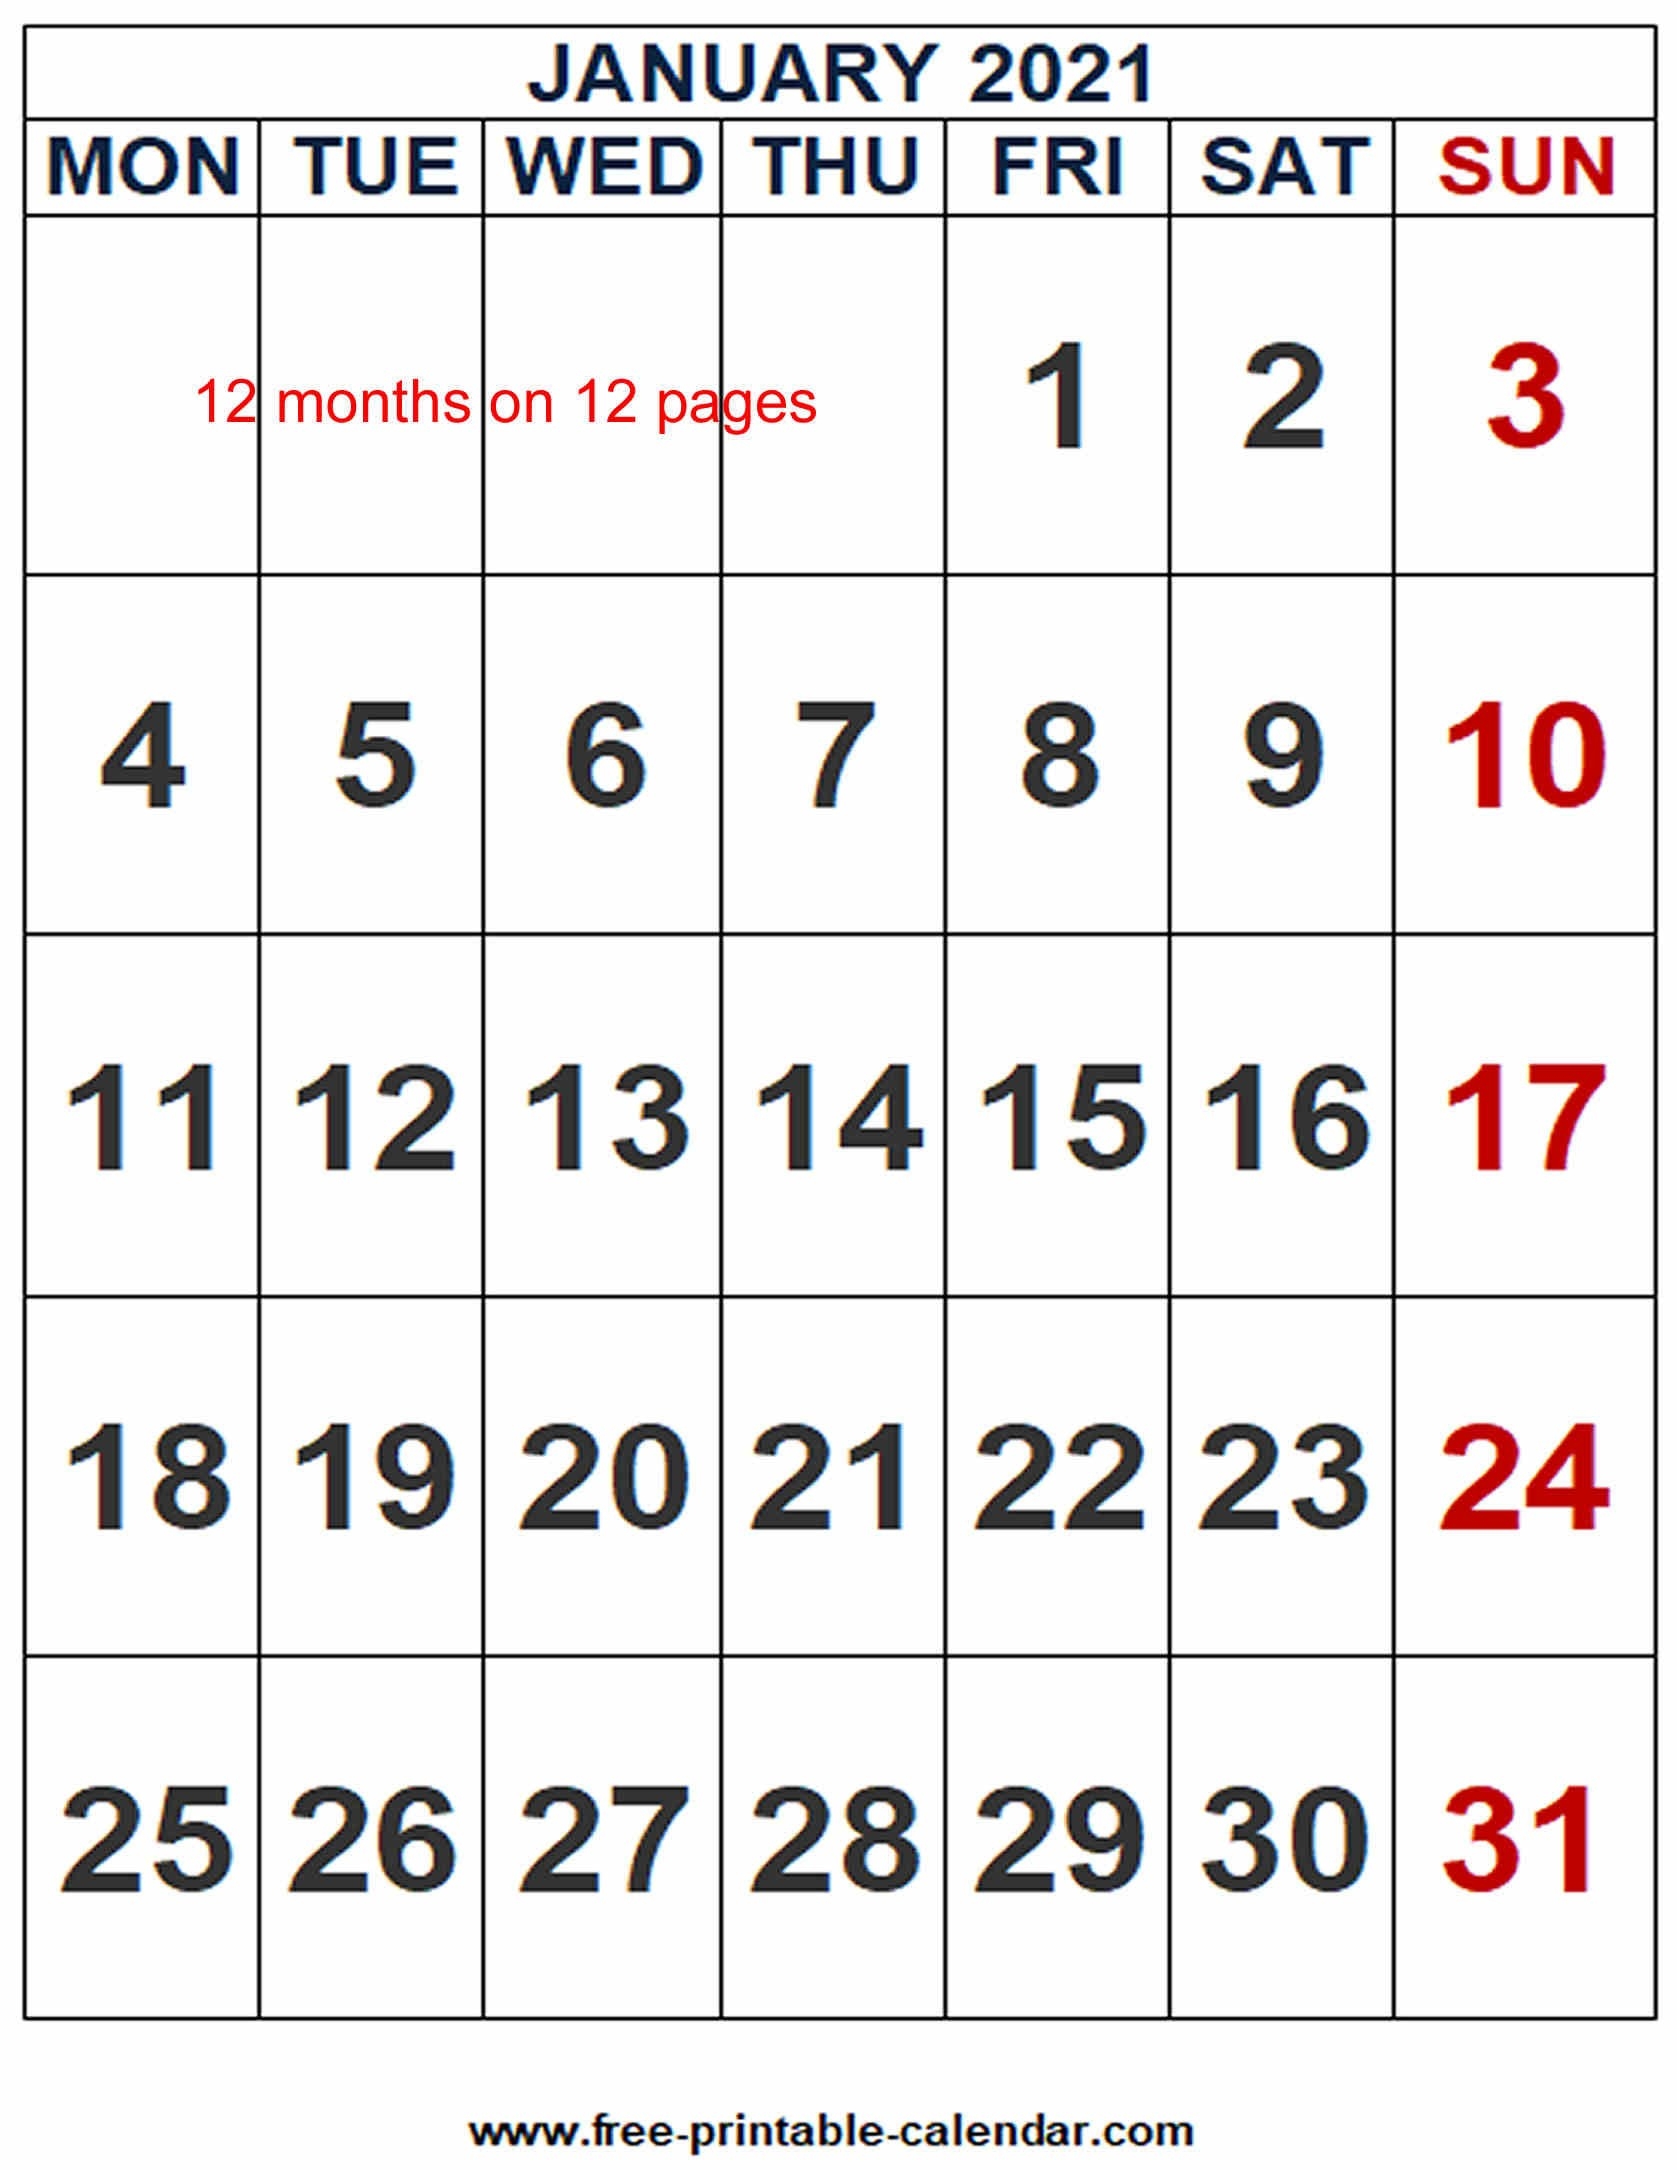 2021 Calendar Word Template - Free-Printable-Calendar-June 2021 Calendar Word Doc